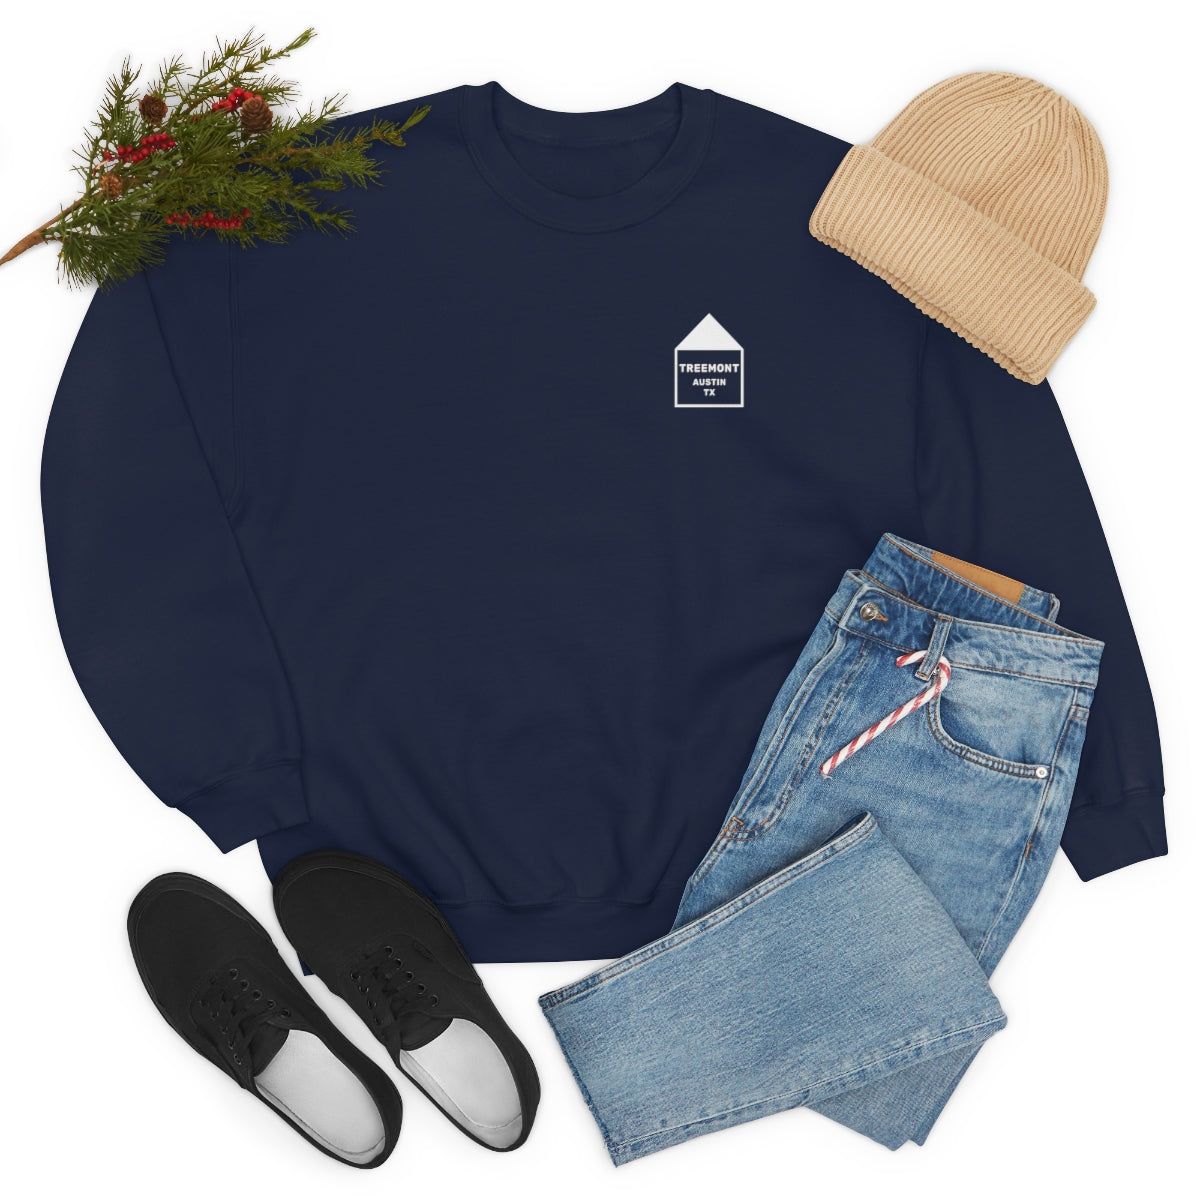 Treemont Sweatshirt: "Home"